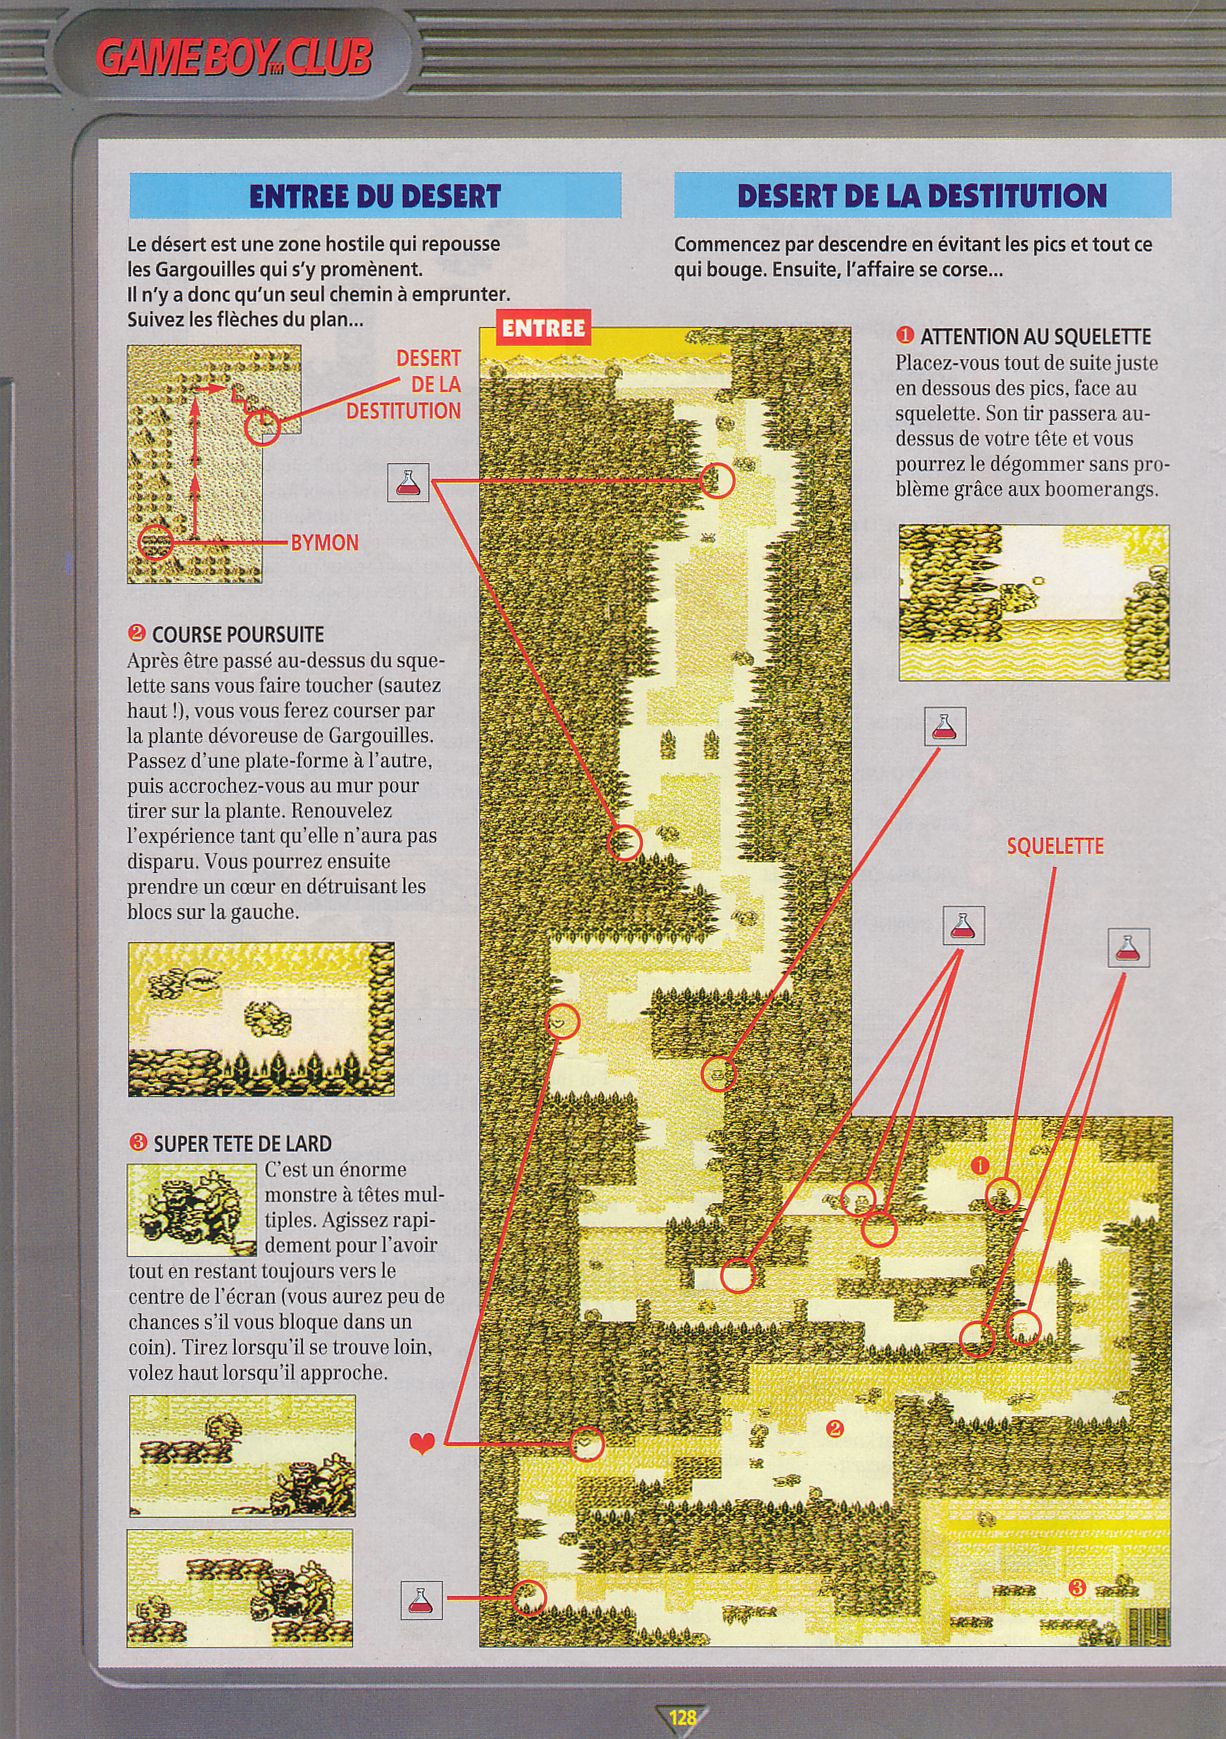 tests/1155/Nintendo Player 007 - Page 128 (1992-11-12).jpg